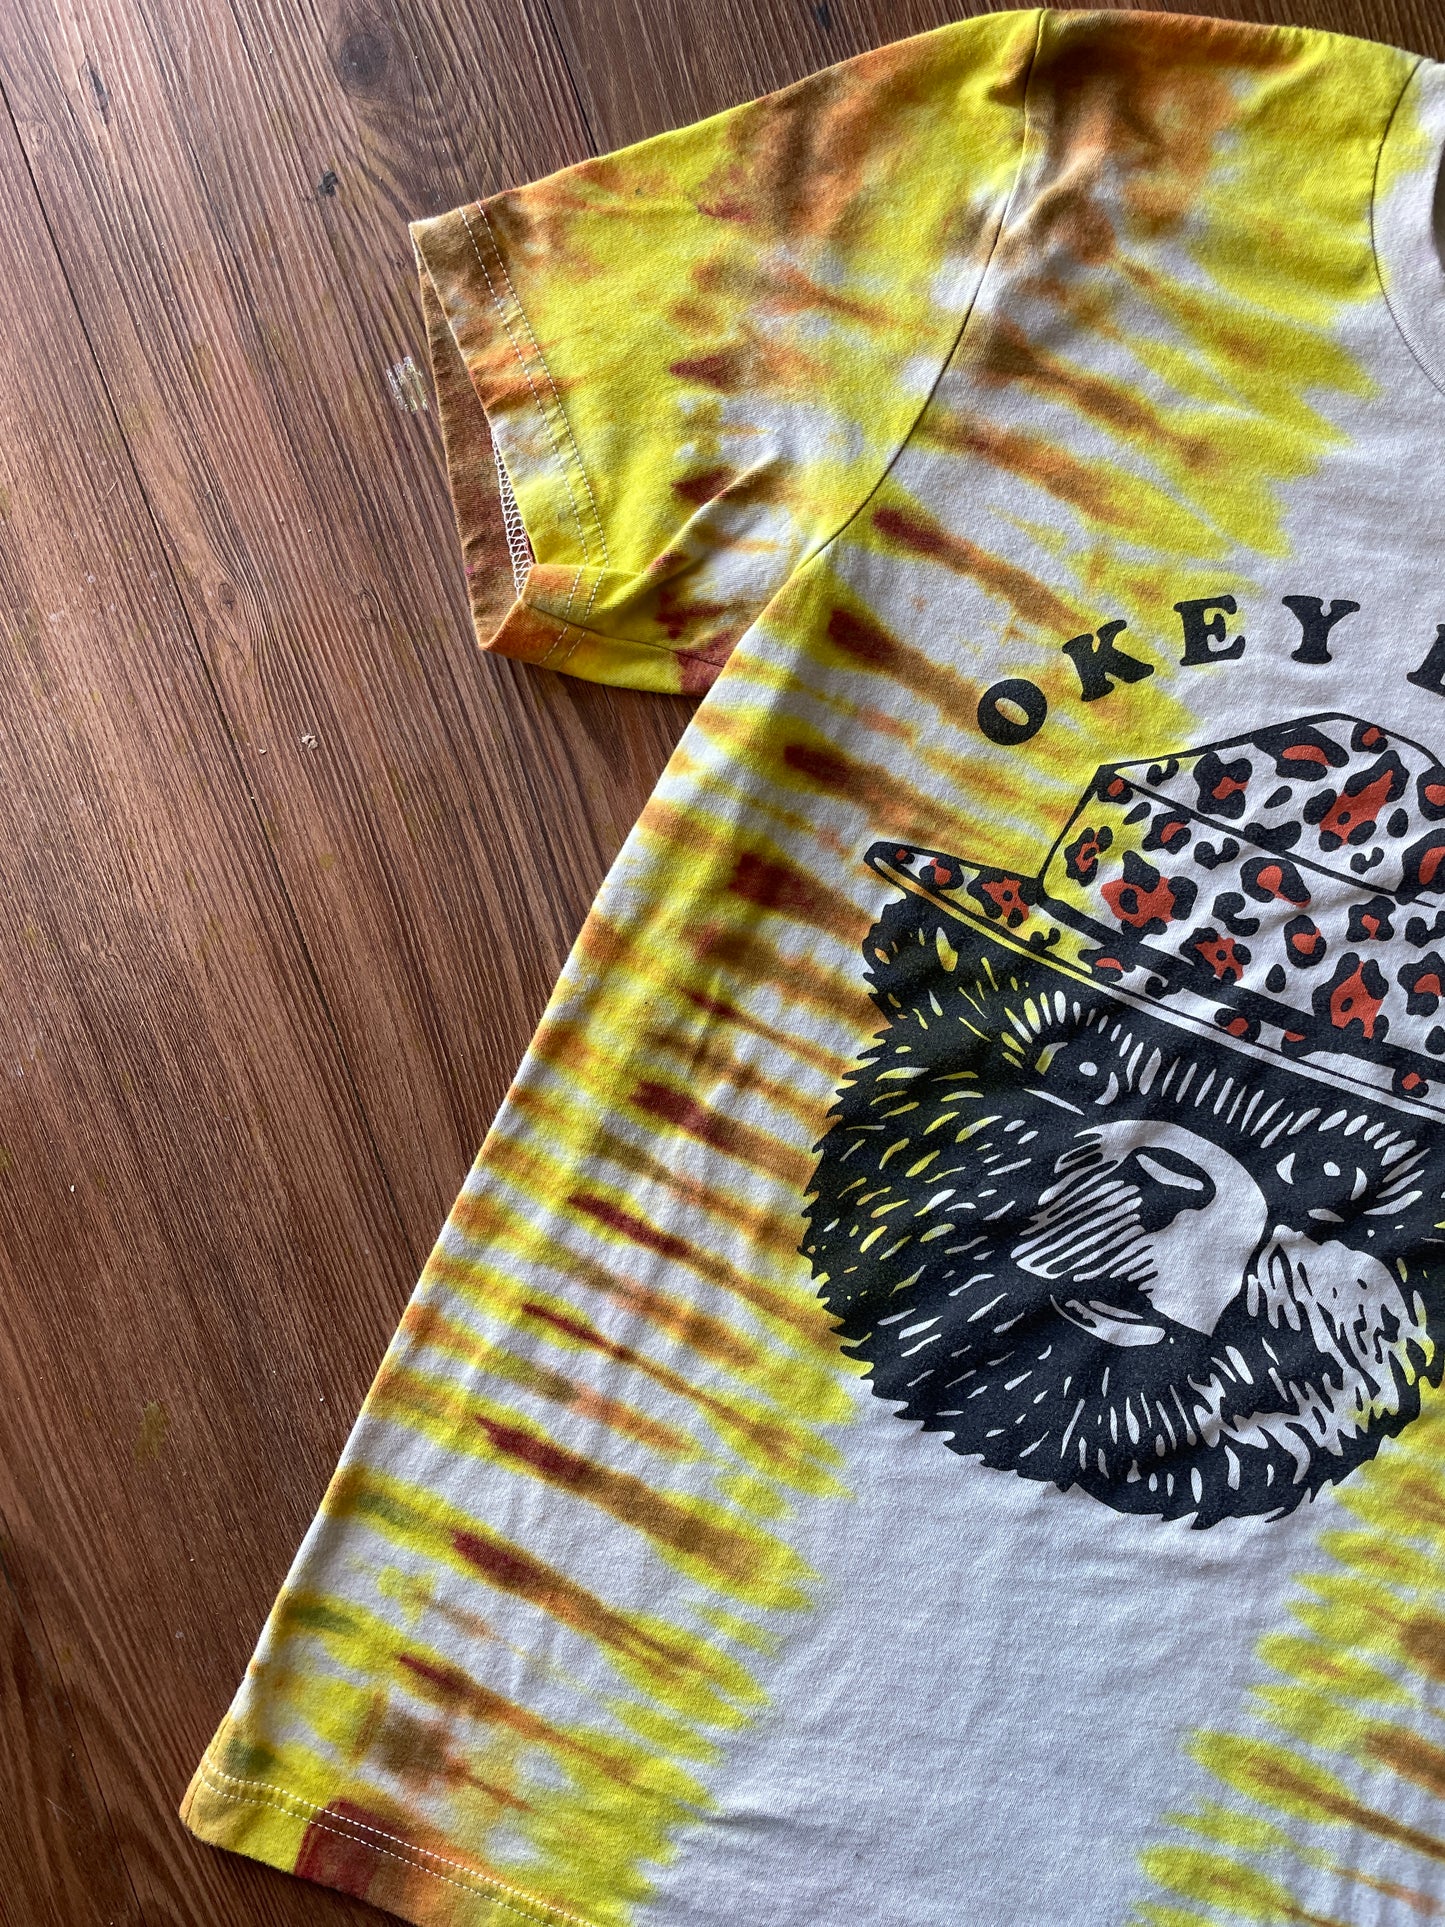 MEDIUM Men’s Okey Dokey Smokey Handmade Tie Dye T-Shirt | One-Of-a-Kind White and Yellow Short Sleeve